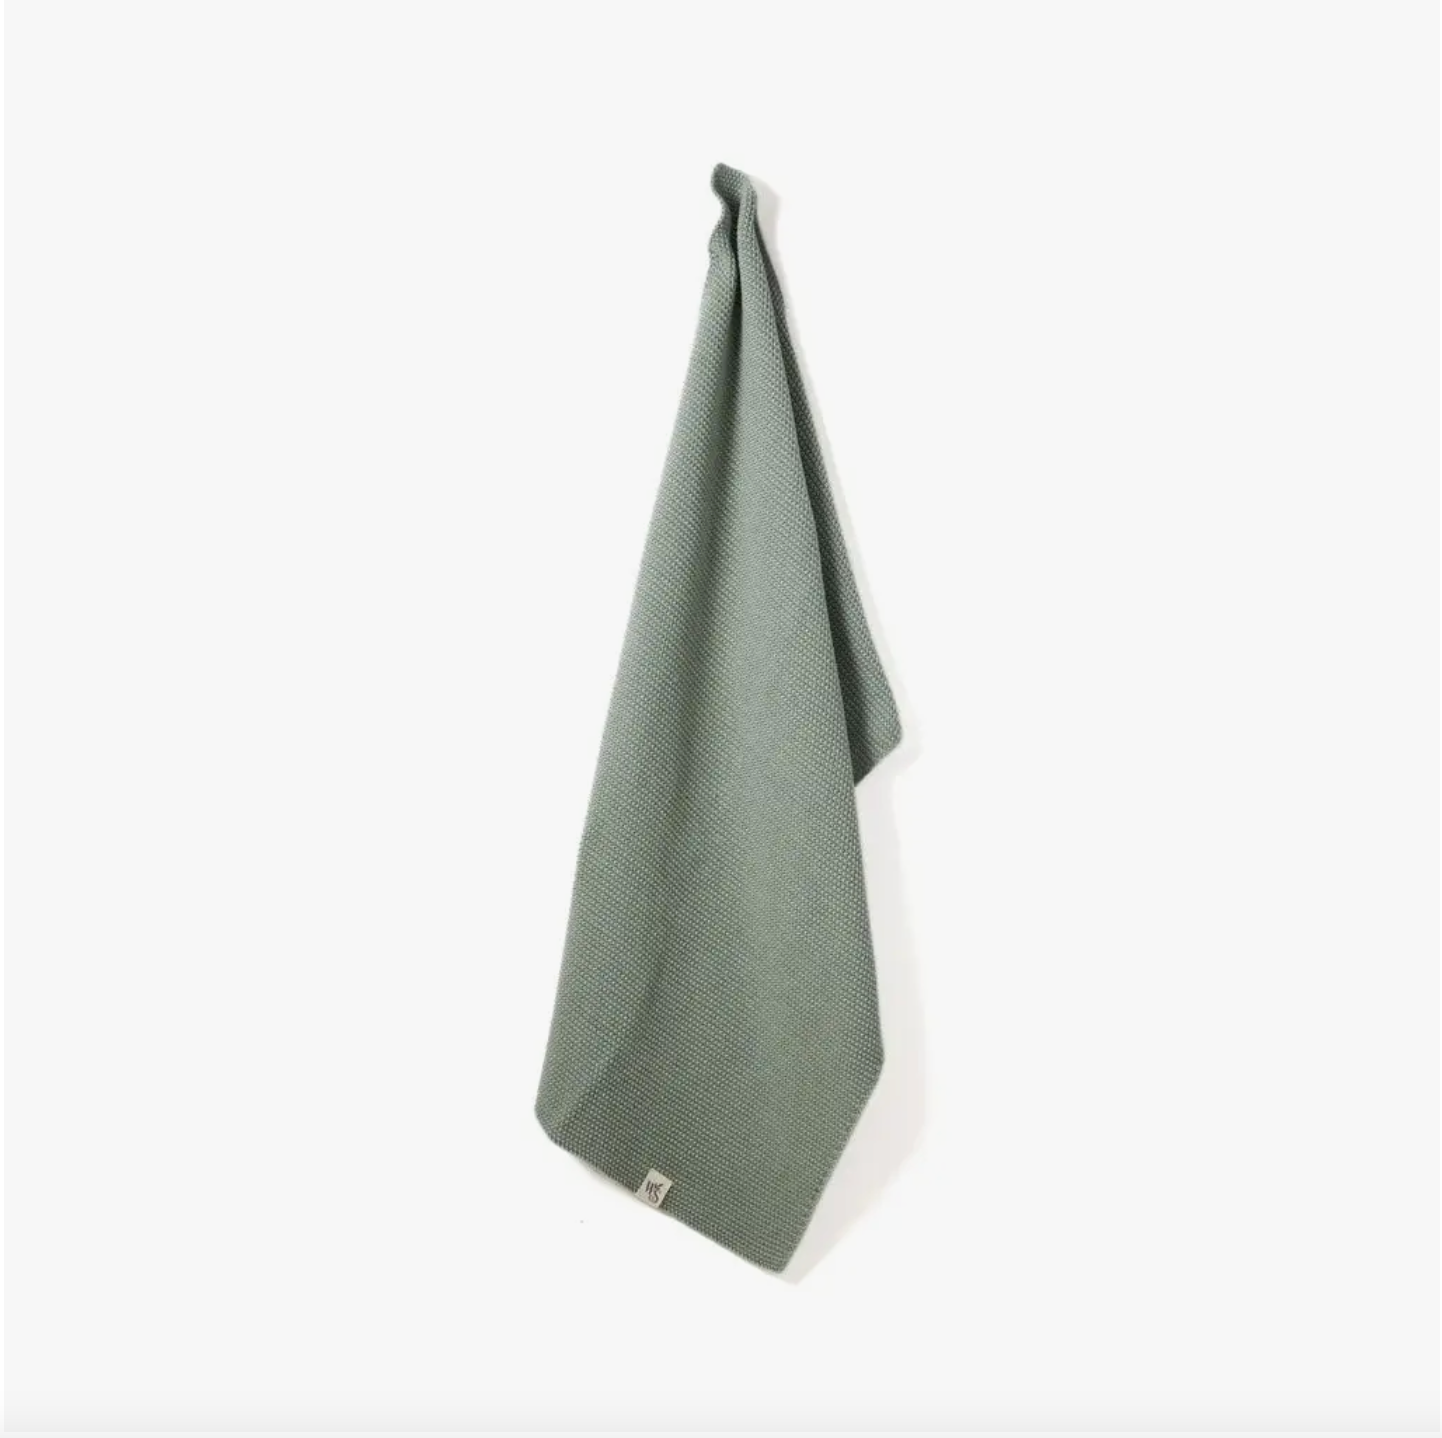 Hand Towels - 100% Organic Cotton - Moss Green